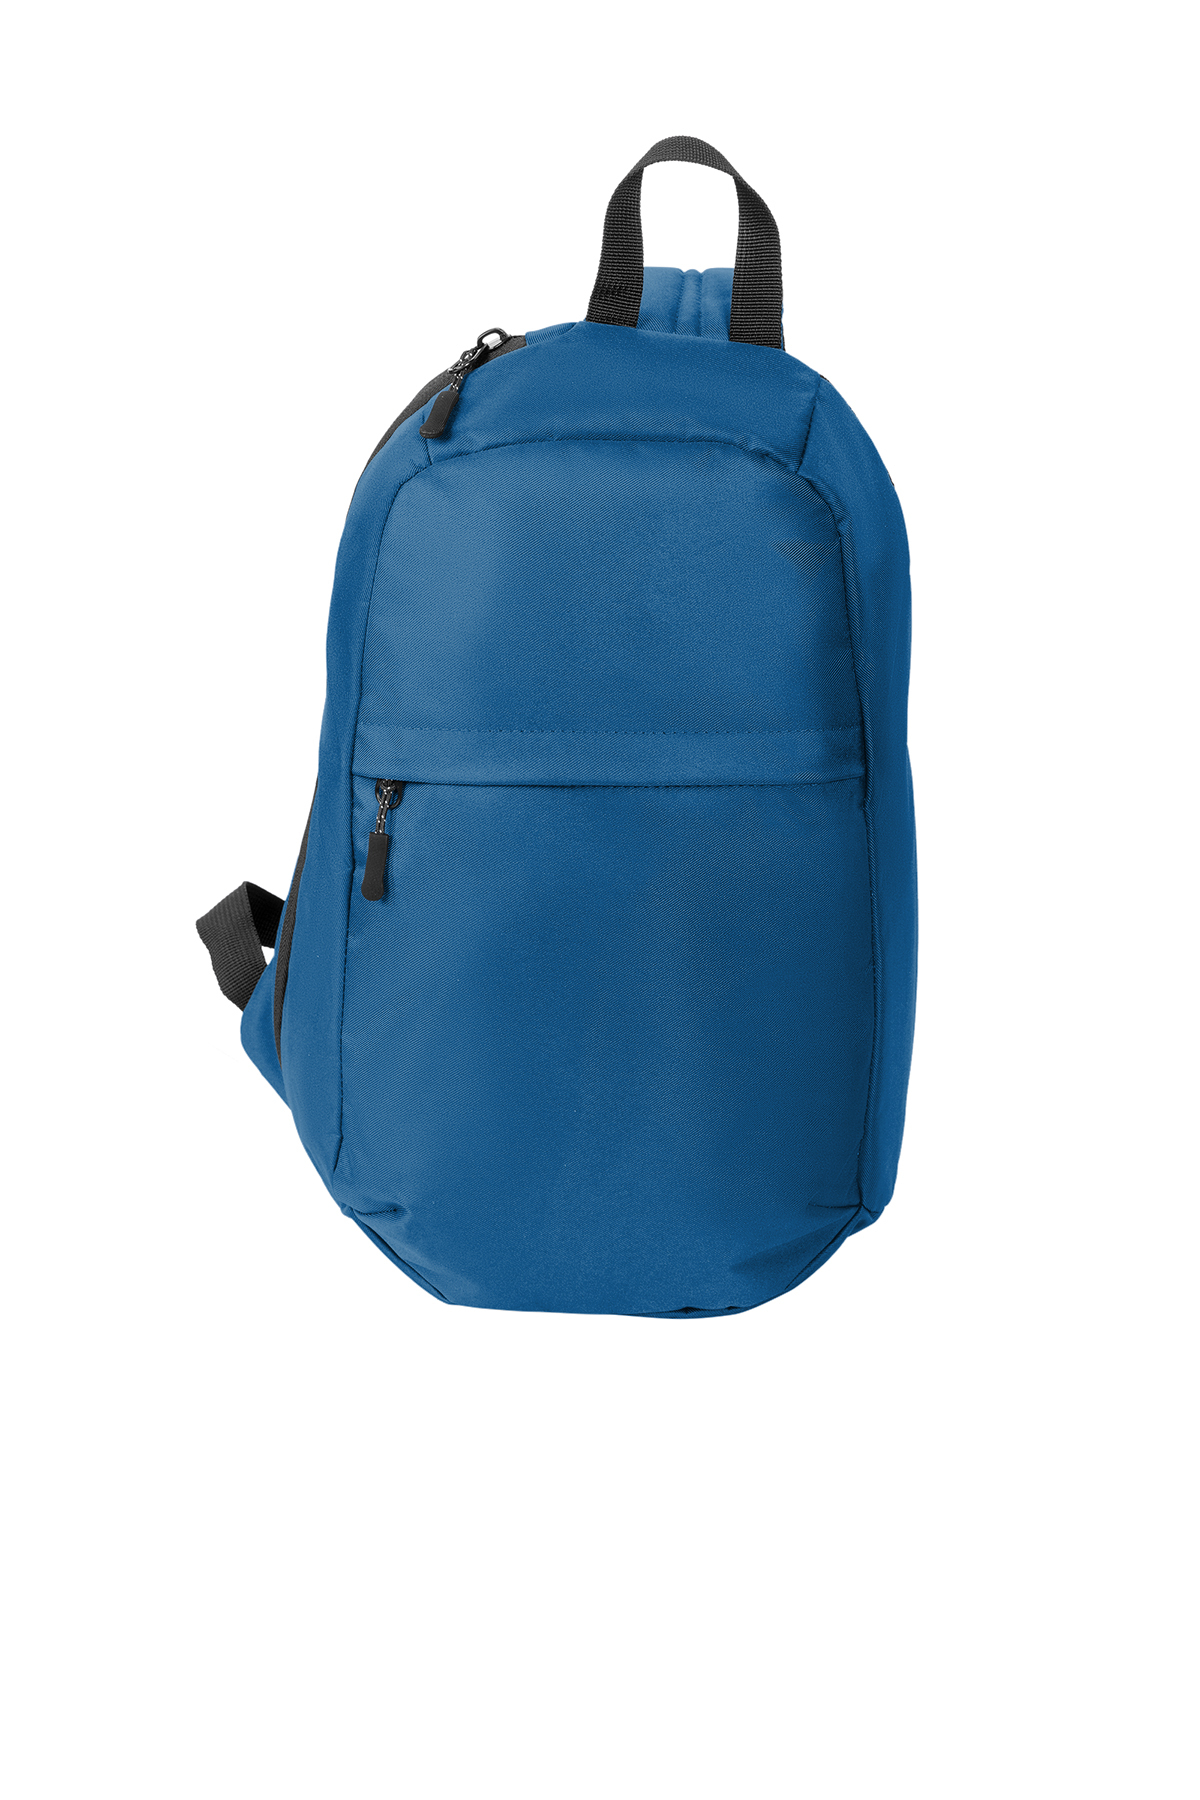 Port Authority BG228 - Crossbody Backpack